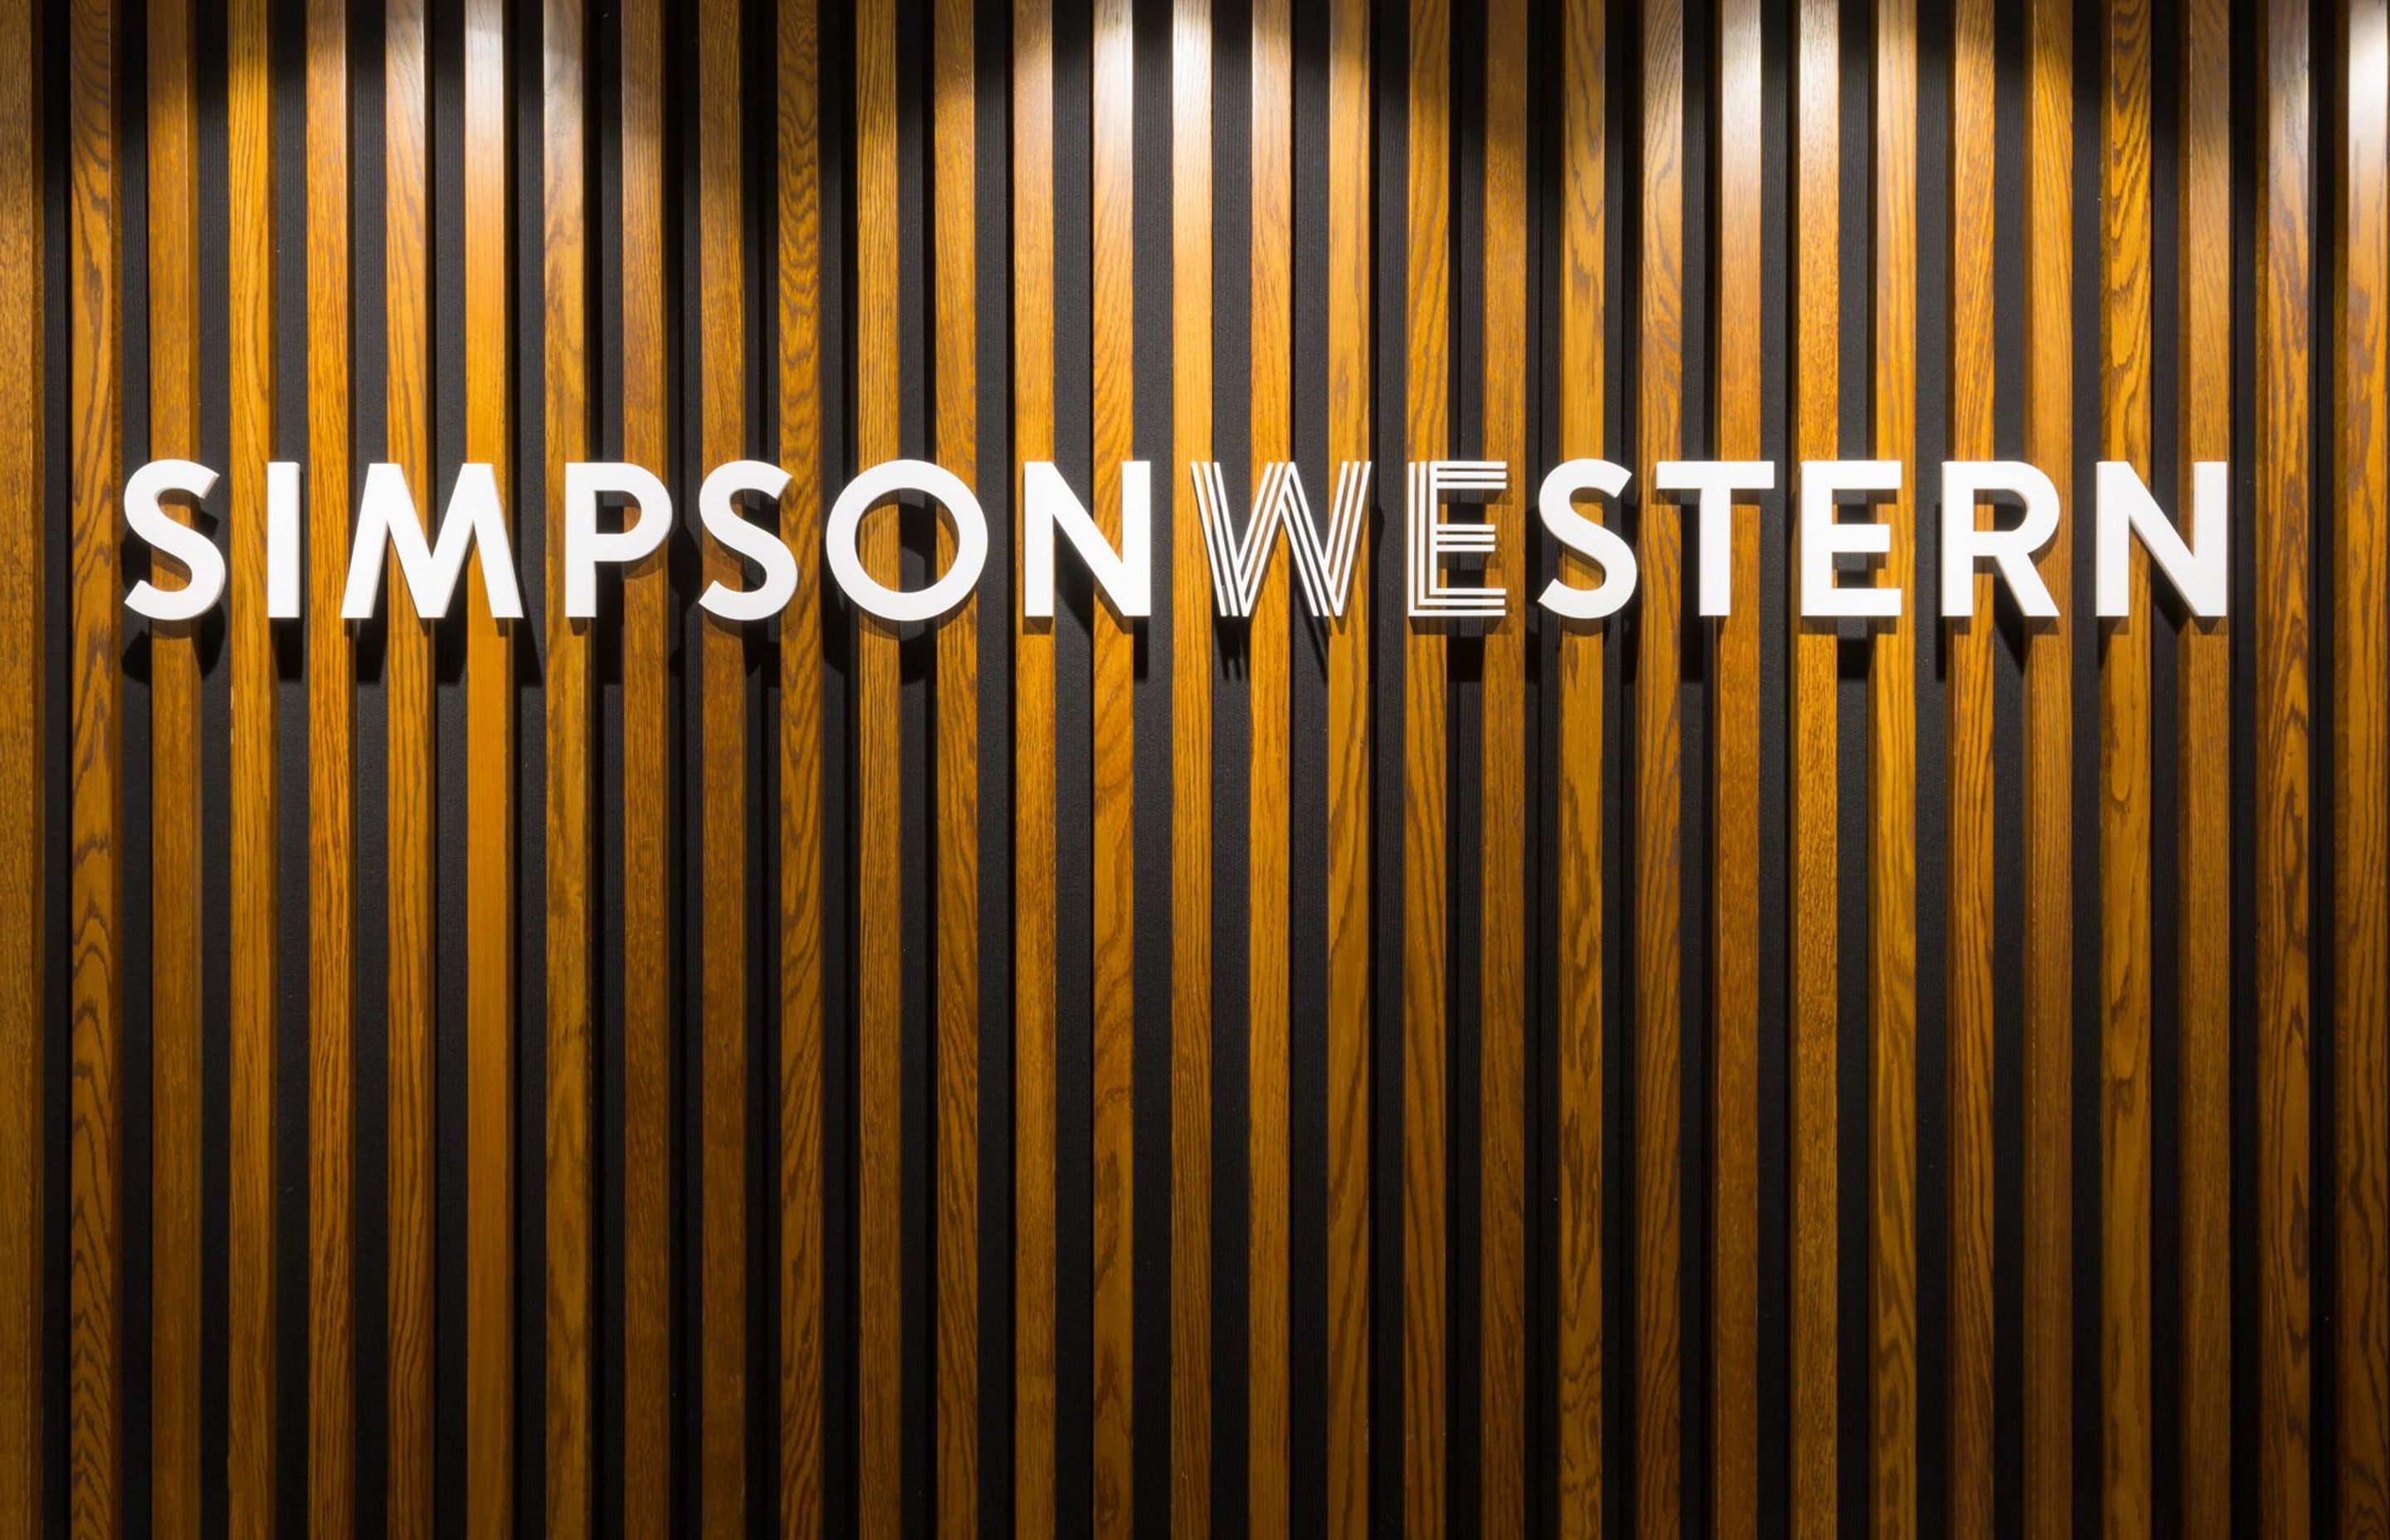 Simpson Western